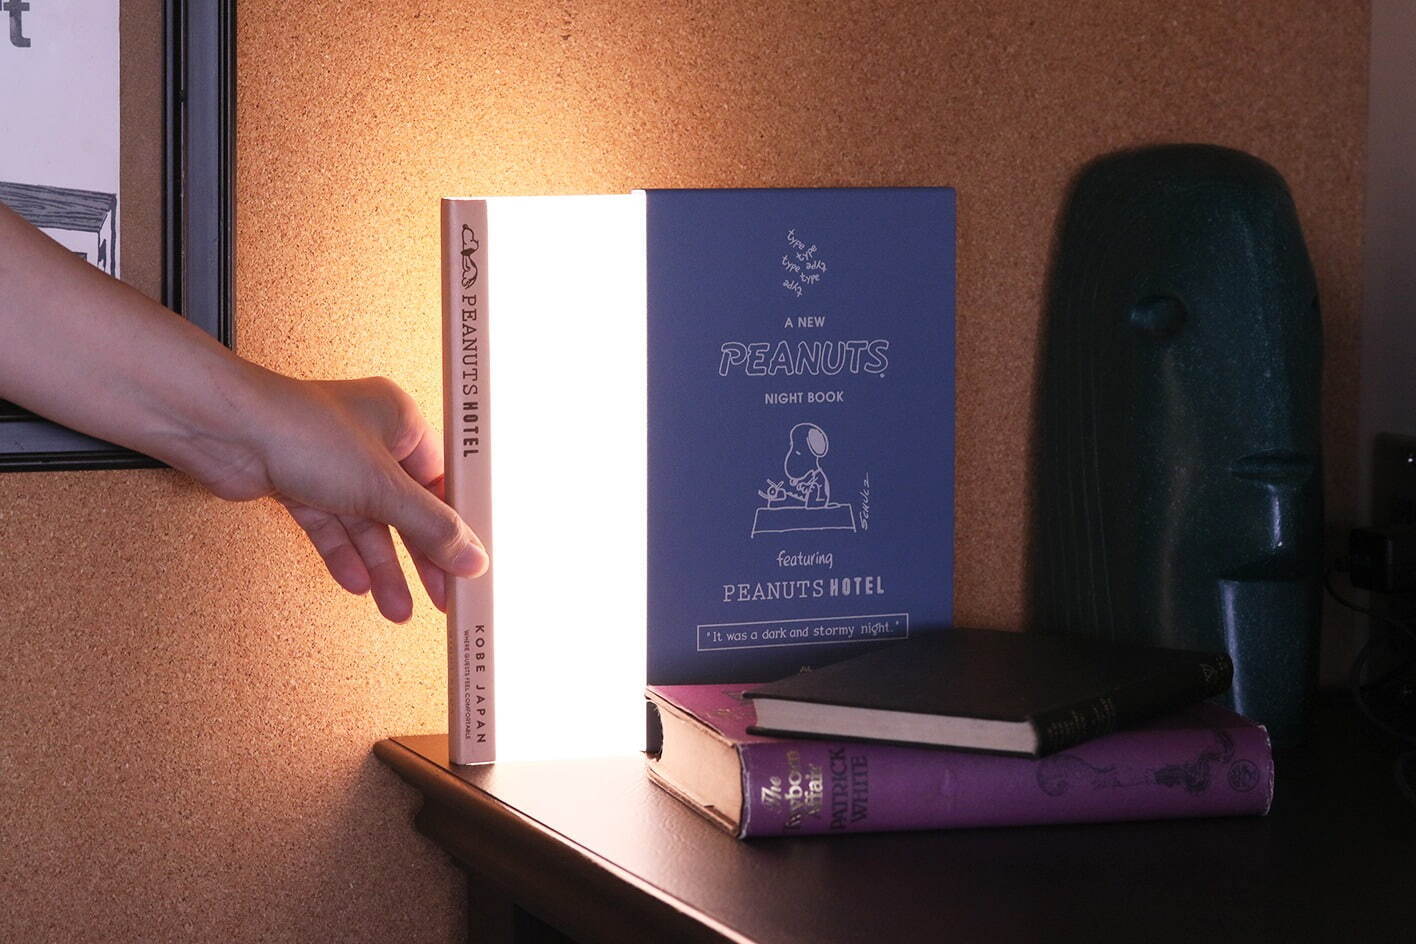 PEANUTS HOTEL ROOM41 LEDライト “DARK & STORMY NIGHT BOOK” 31,900円